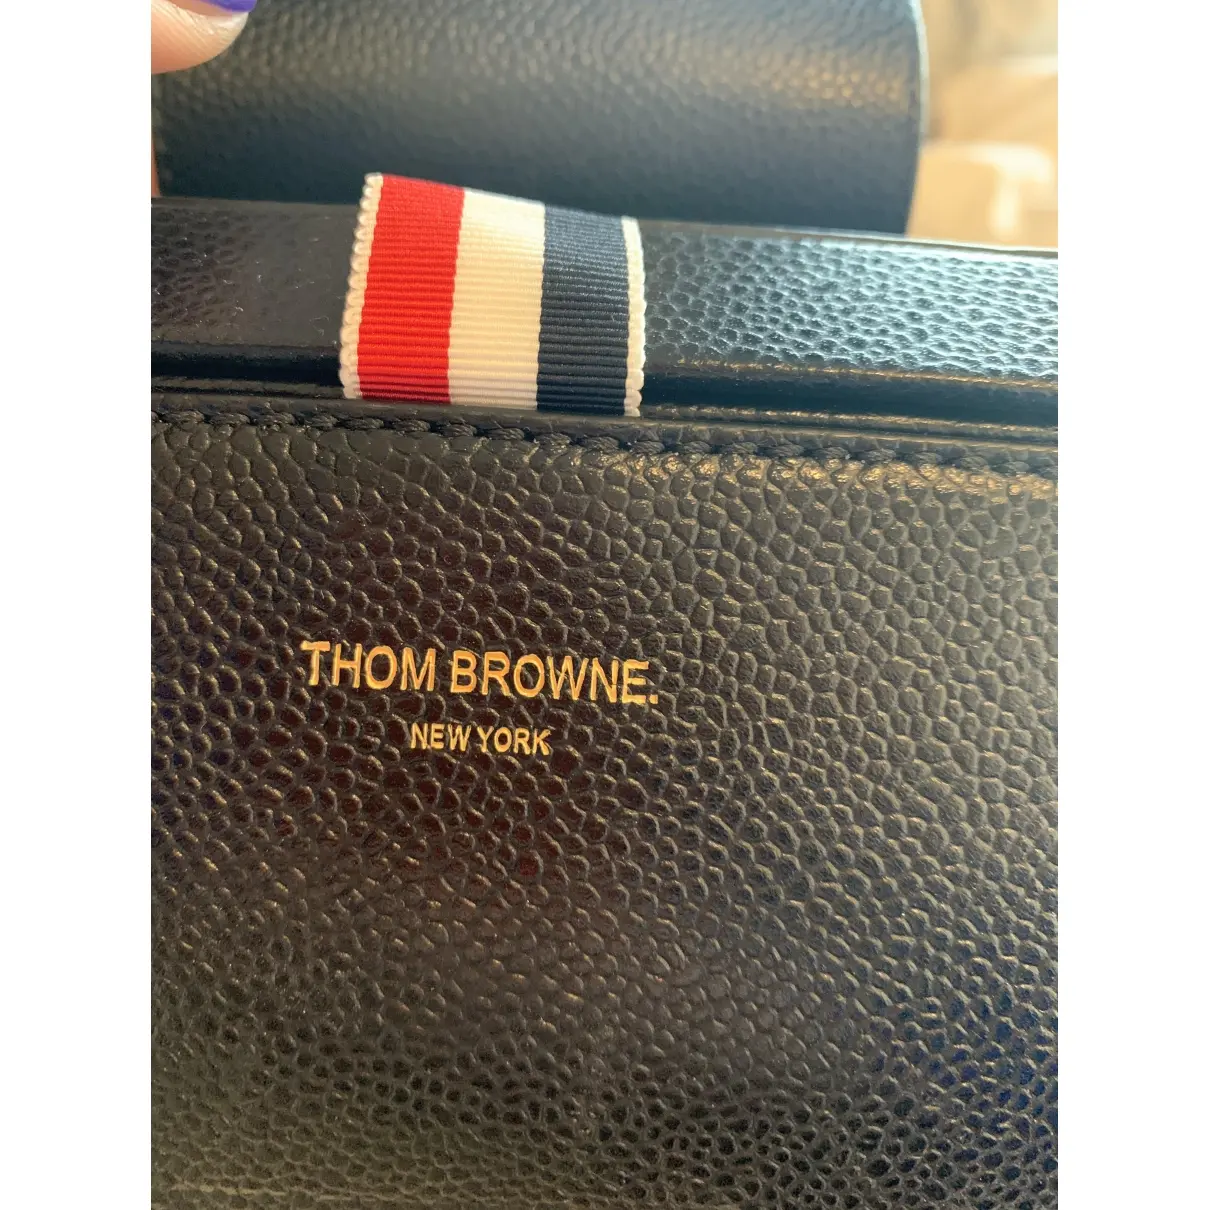 Leather bag Thom Browne